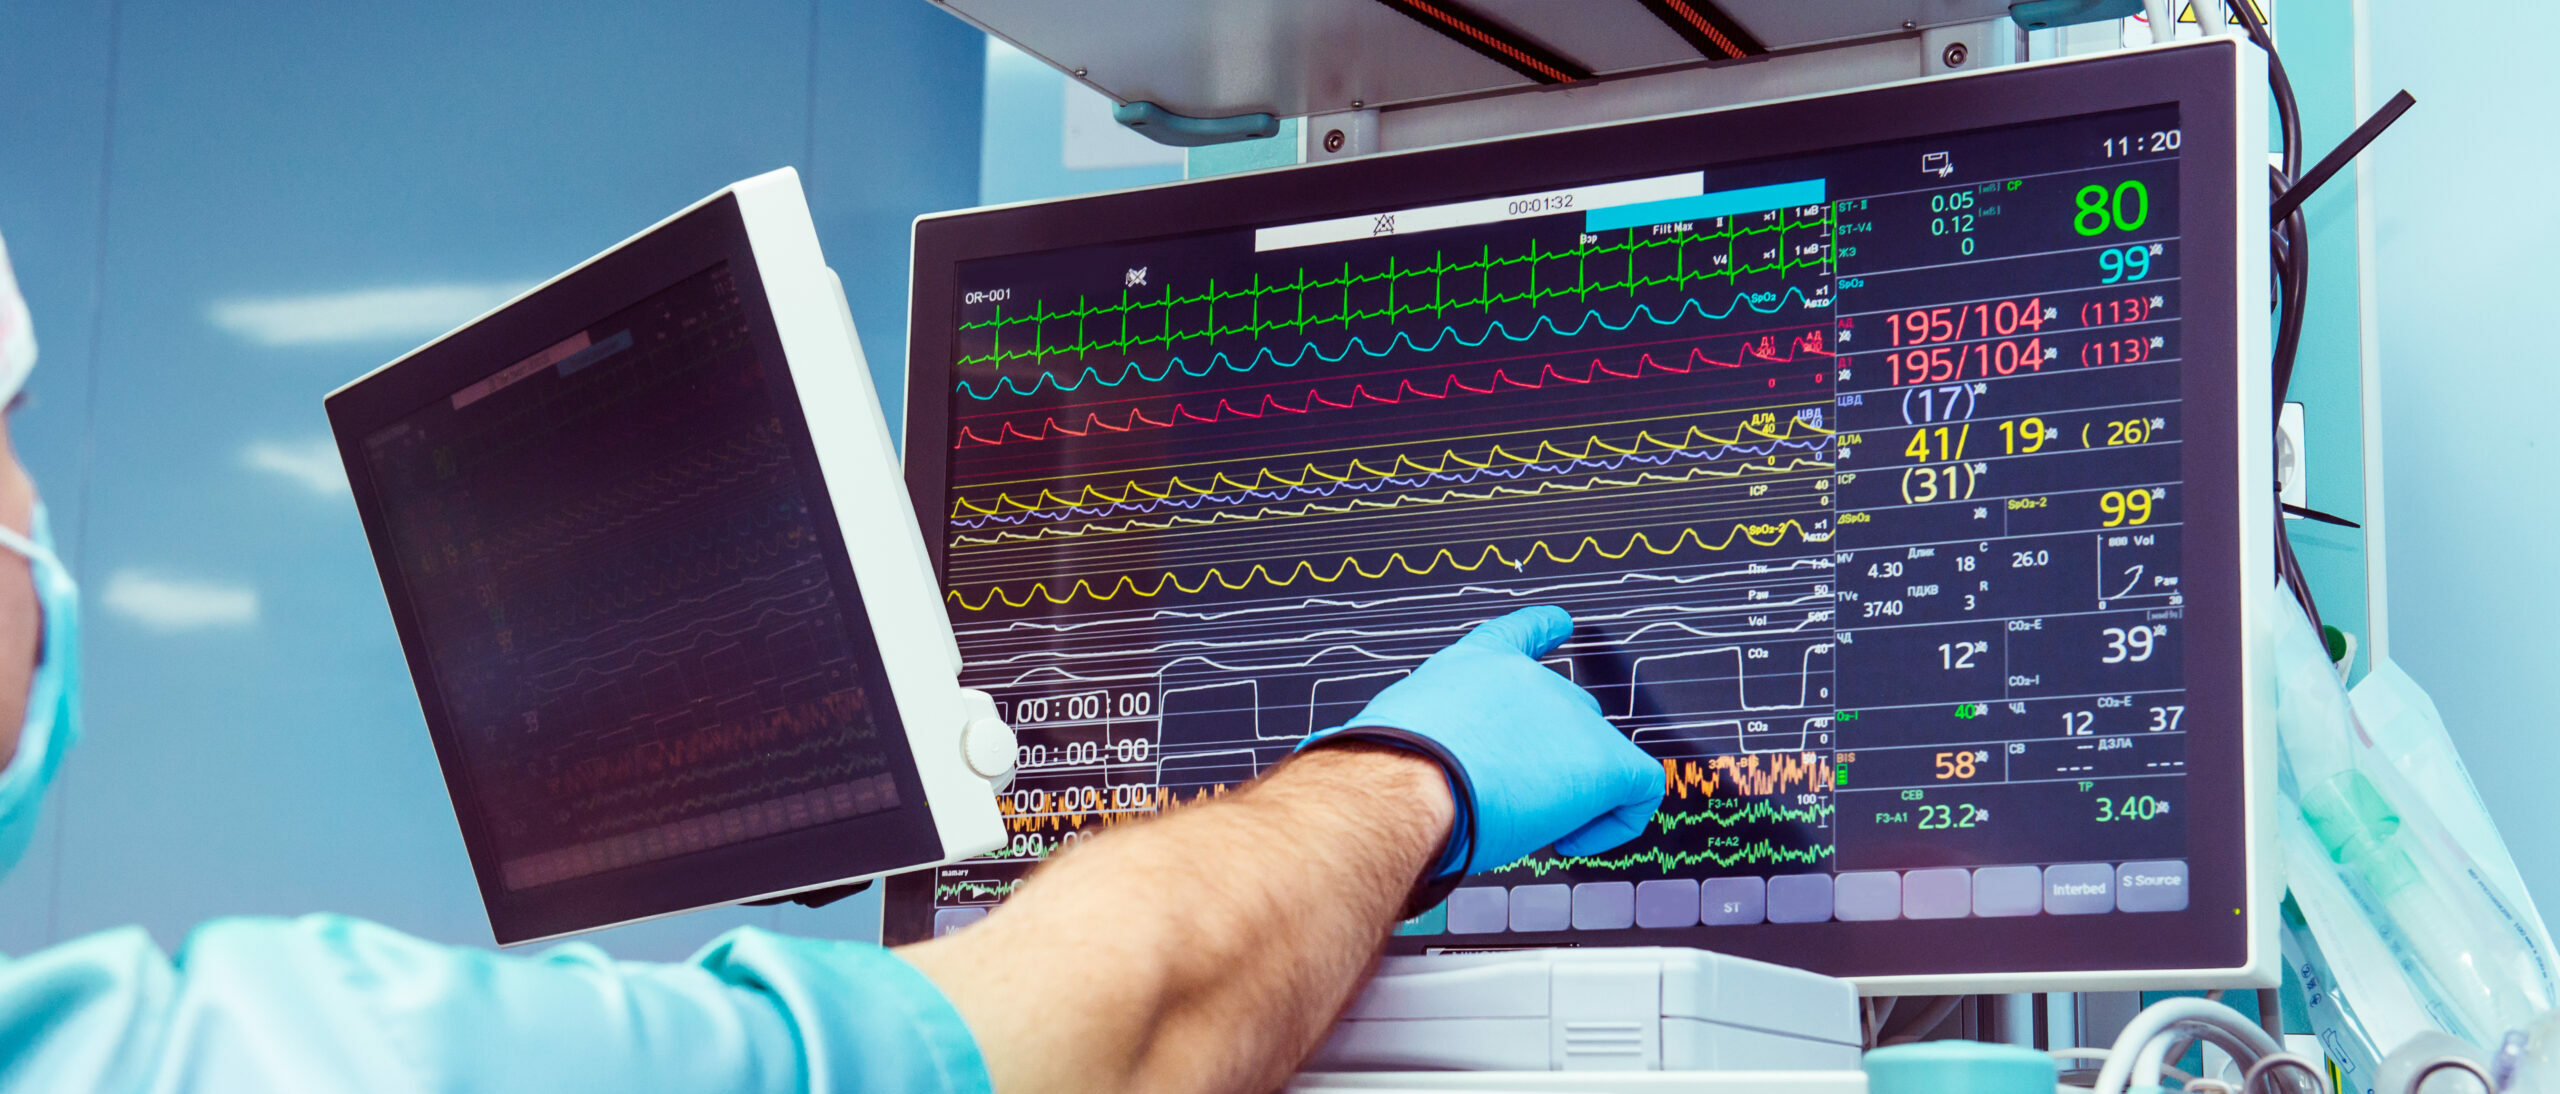 Azura Vascular Care Data Breach Investigation